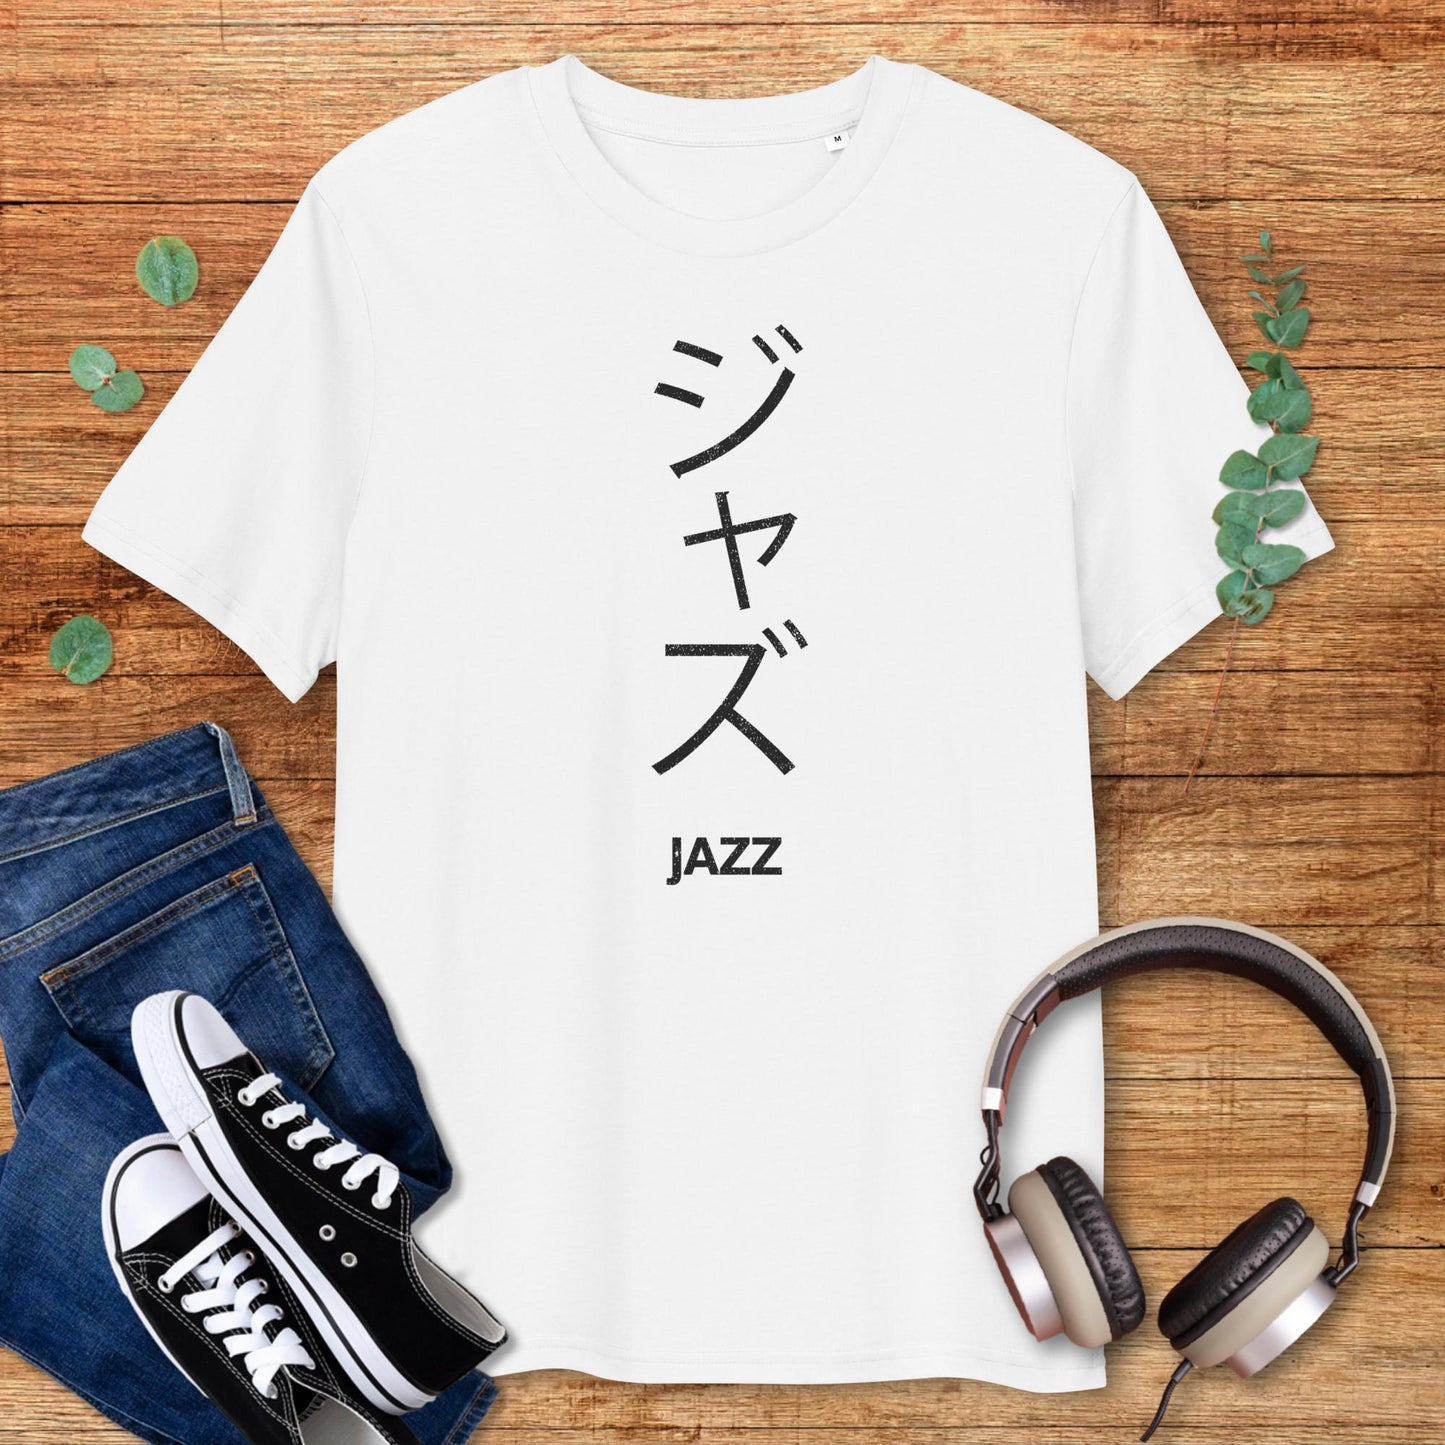 Jazz in Japanese